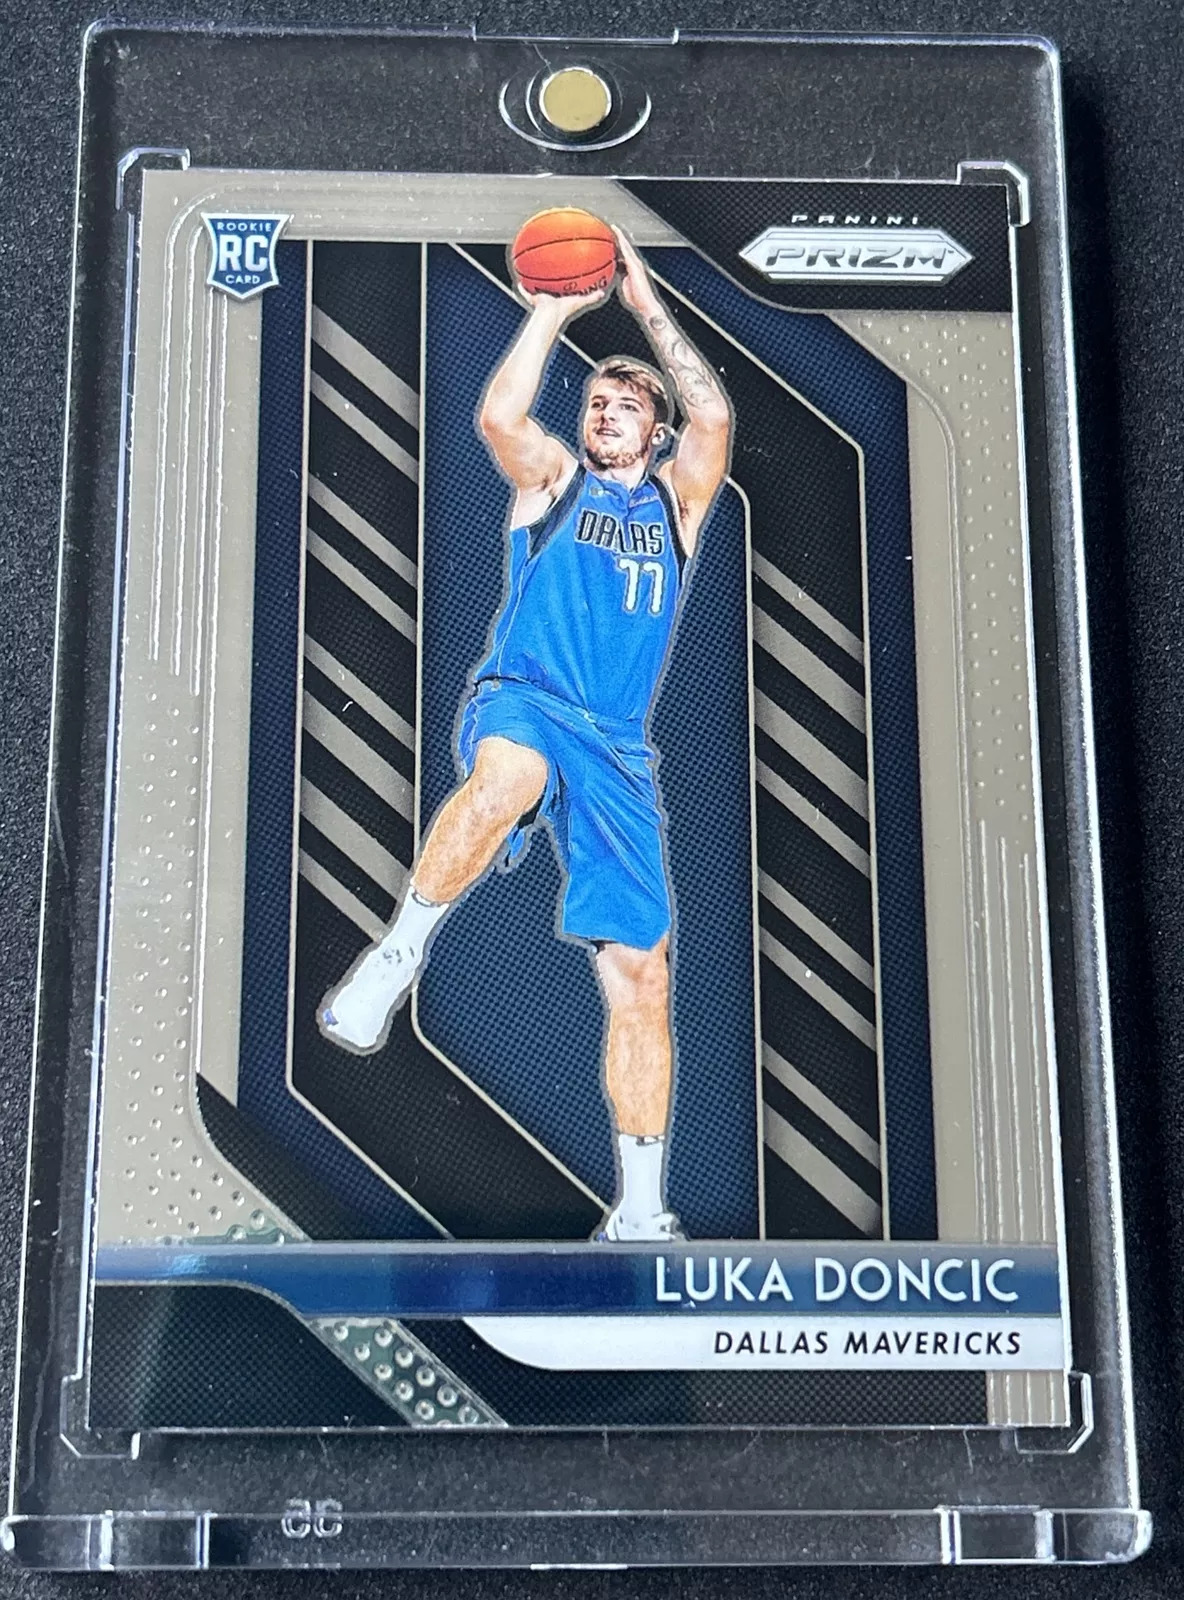 2018 Panini Prizm Luka Doncic rookie card